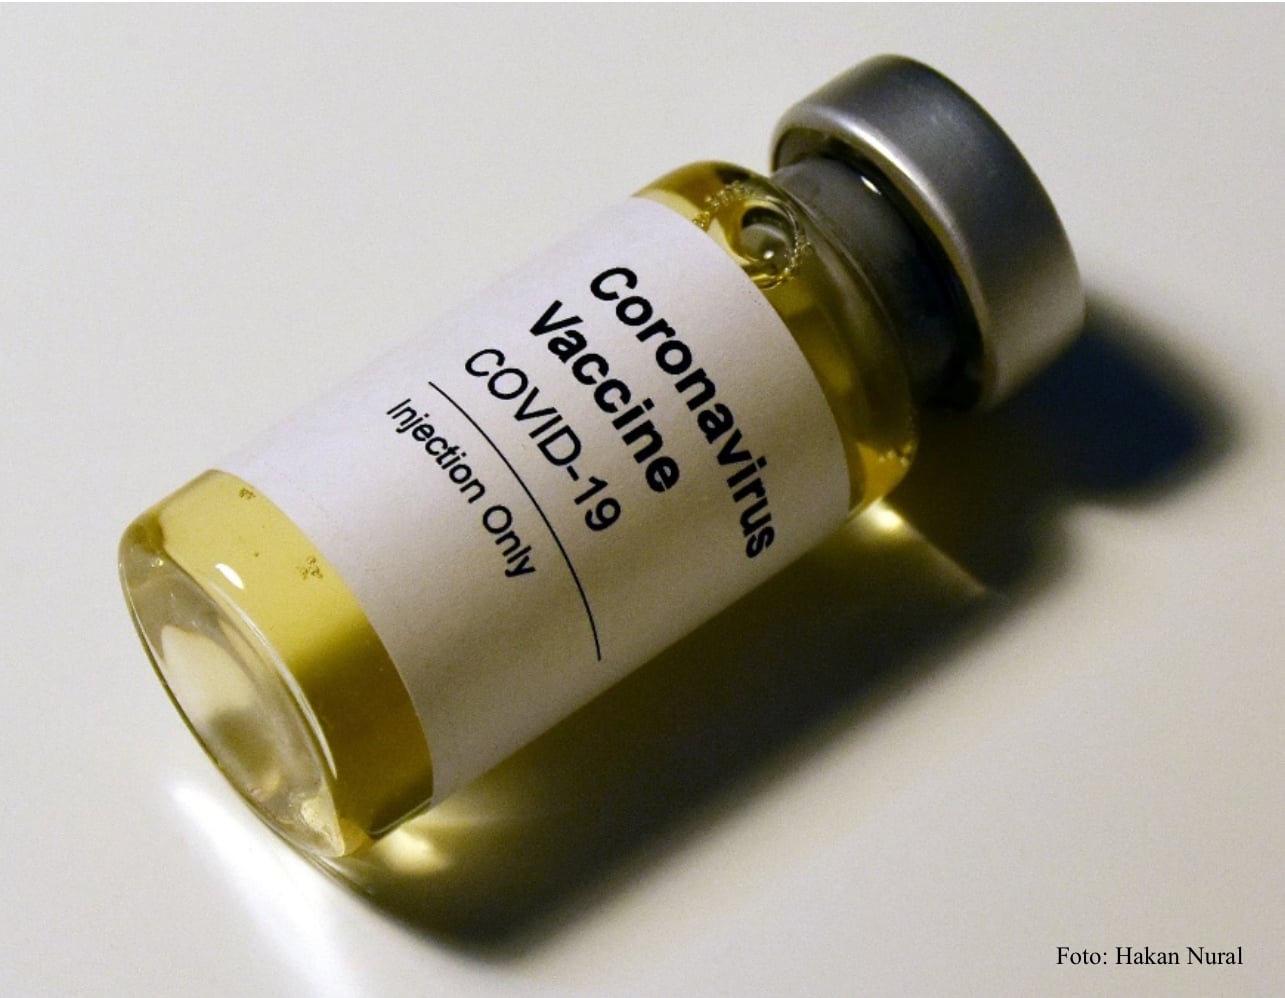 corona-impfstoff